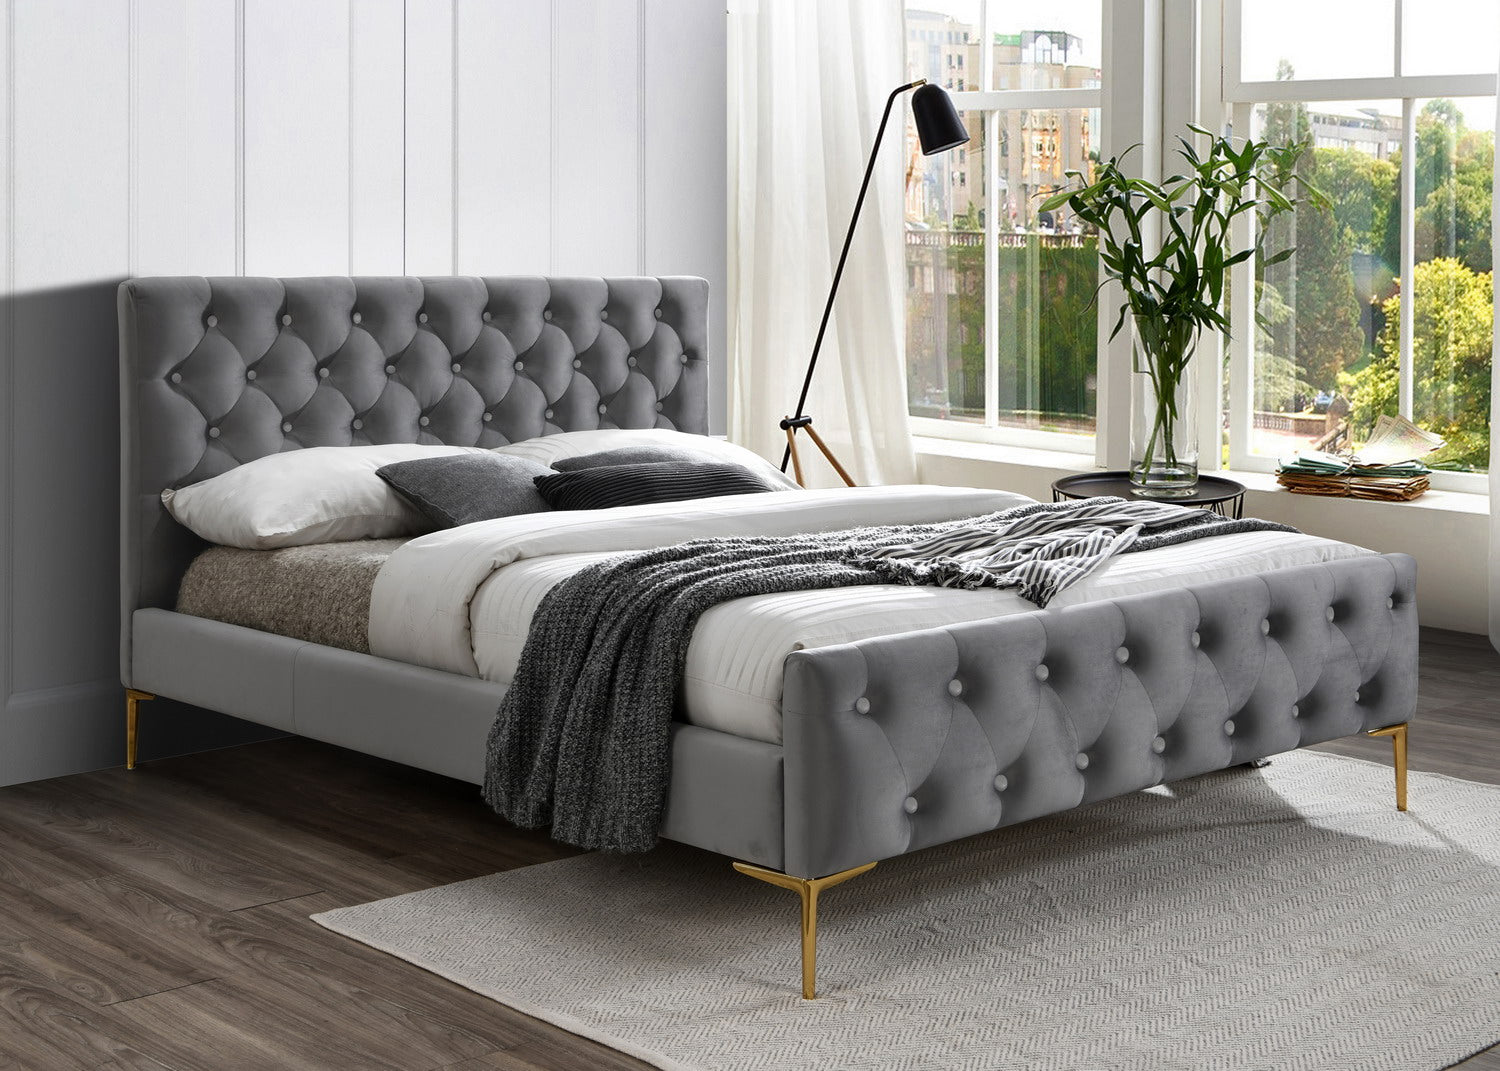 France Upholstered Platform Bed - Queen size, Charcoal